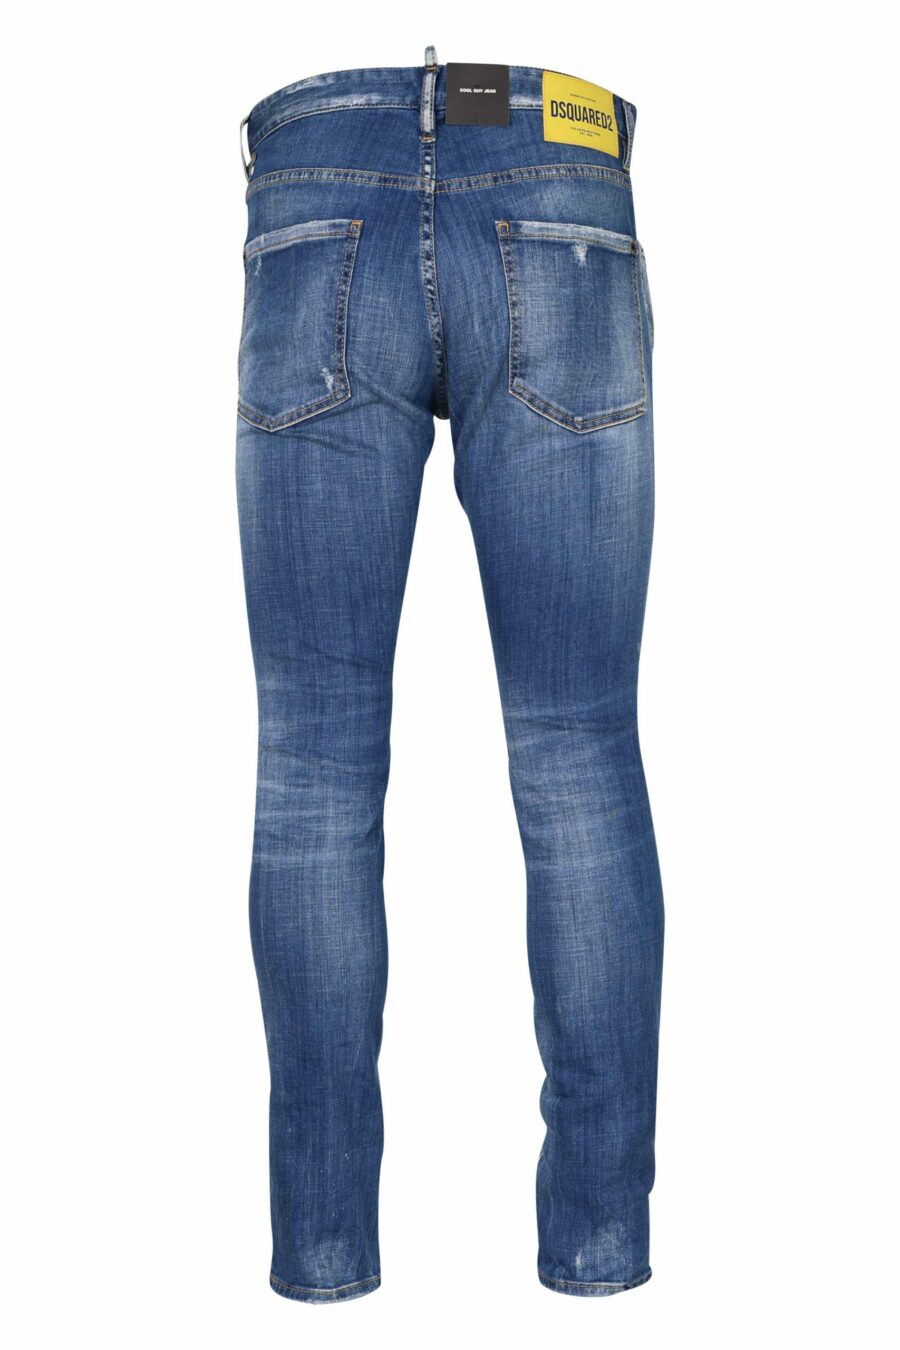 Pantalon bleu clair "cool guy jean" semi-fendu et semi-usé - 8054148311414 2 échelle